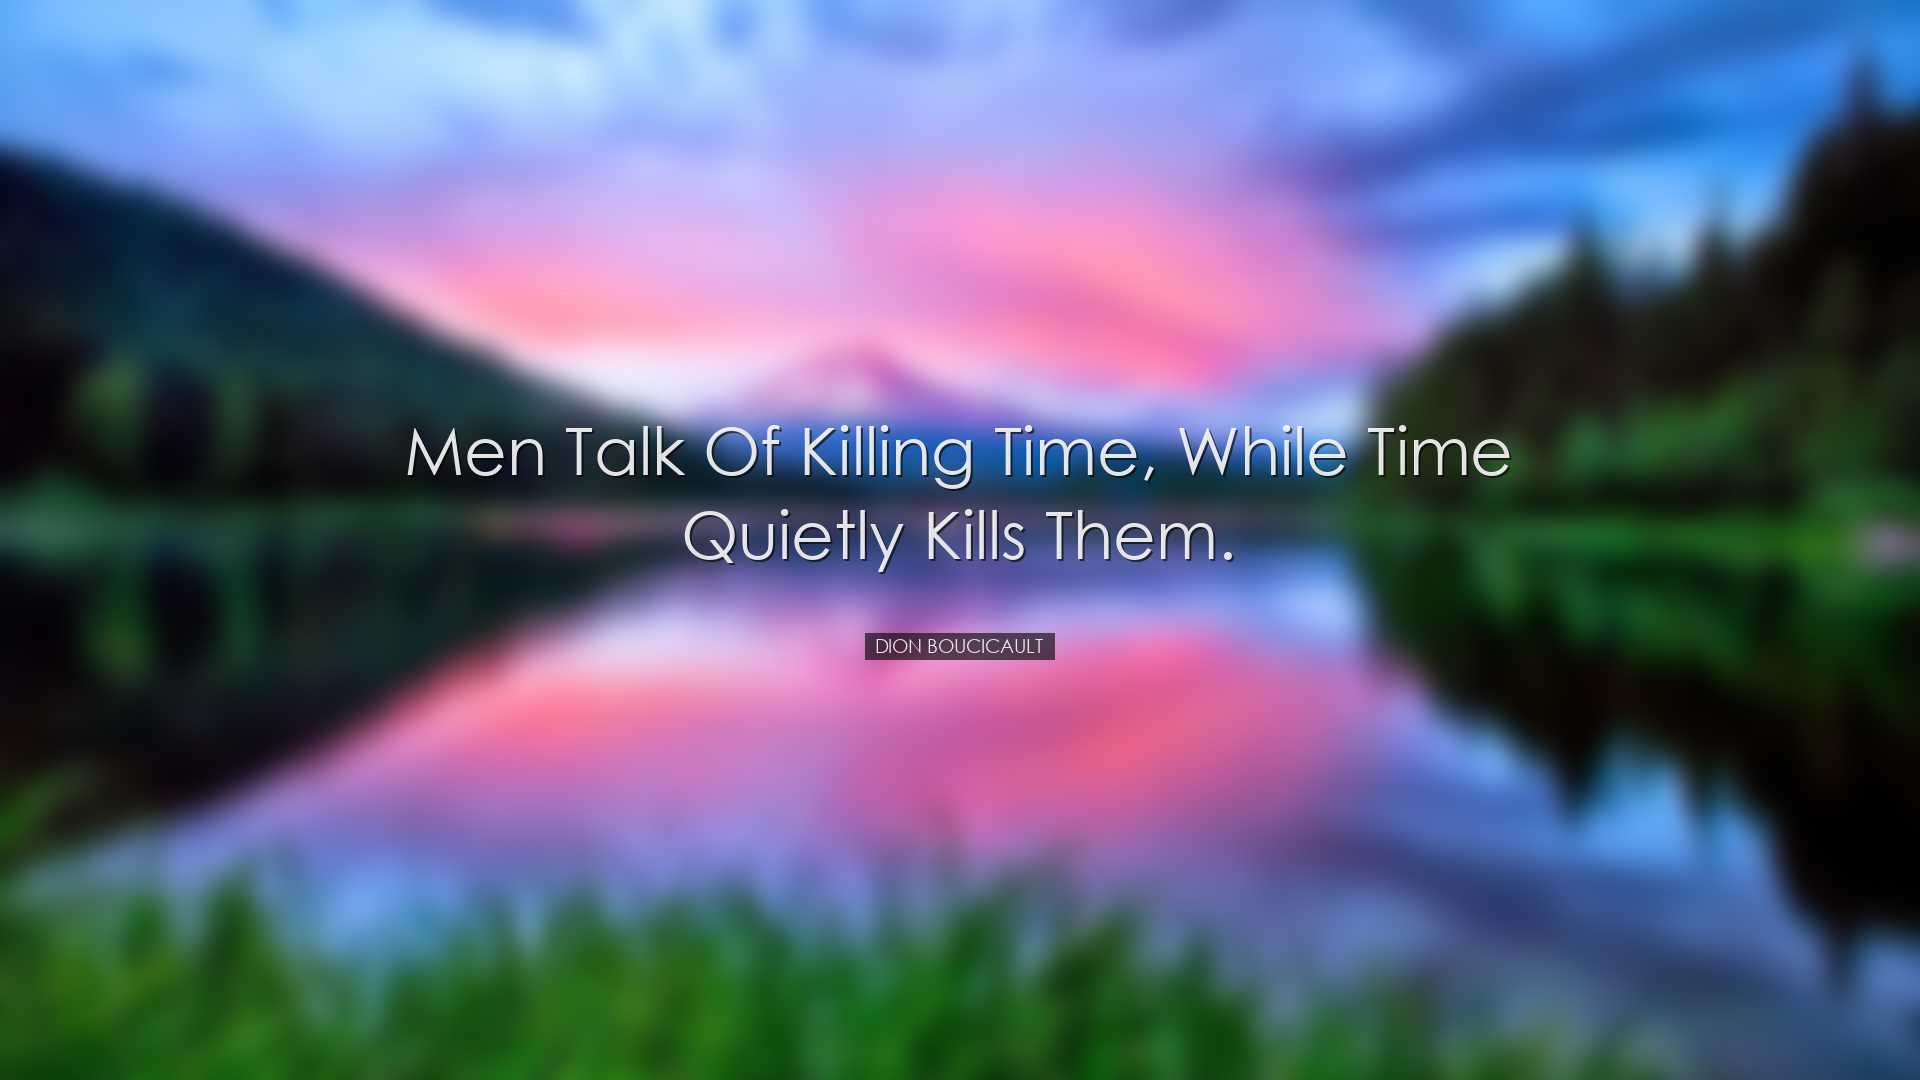 Men talk of killing time, while time quietly kills them. - Dion Bo